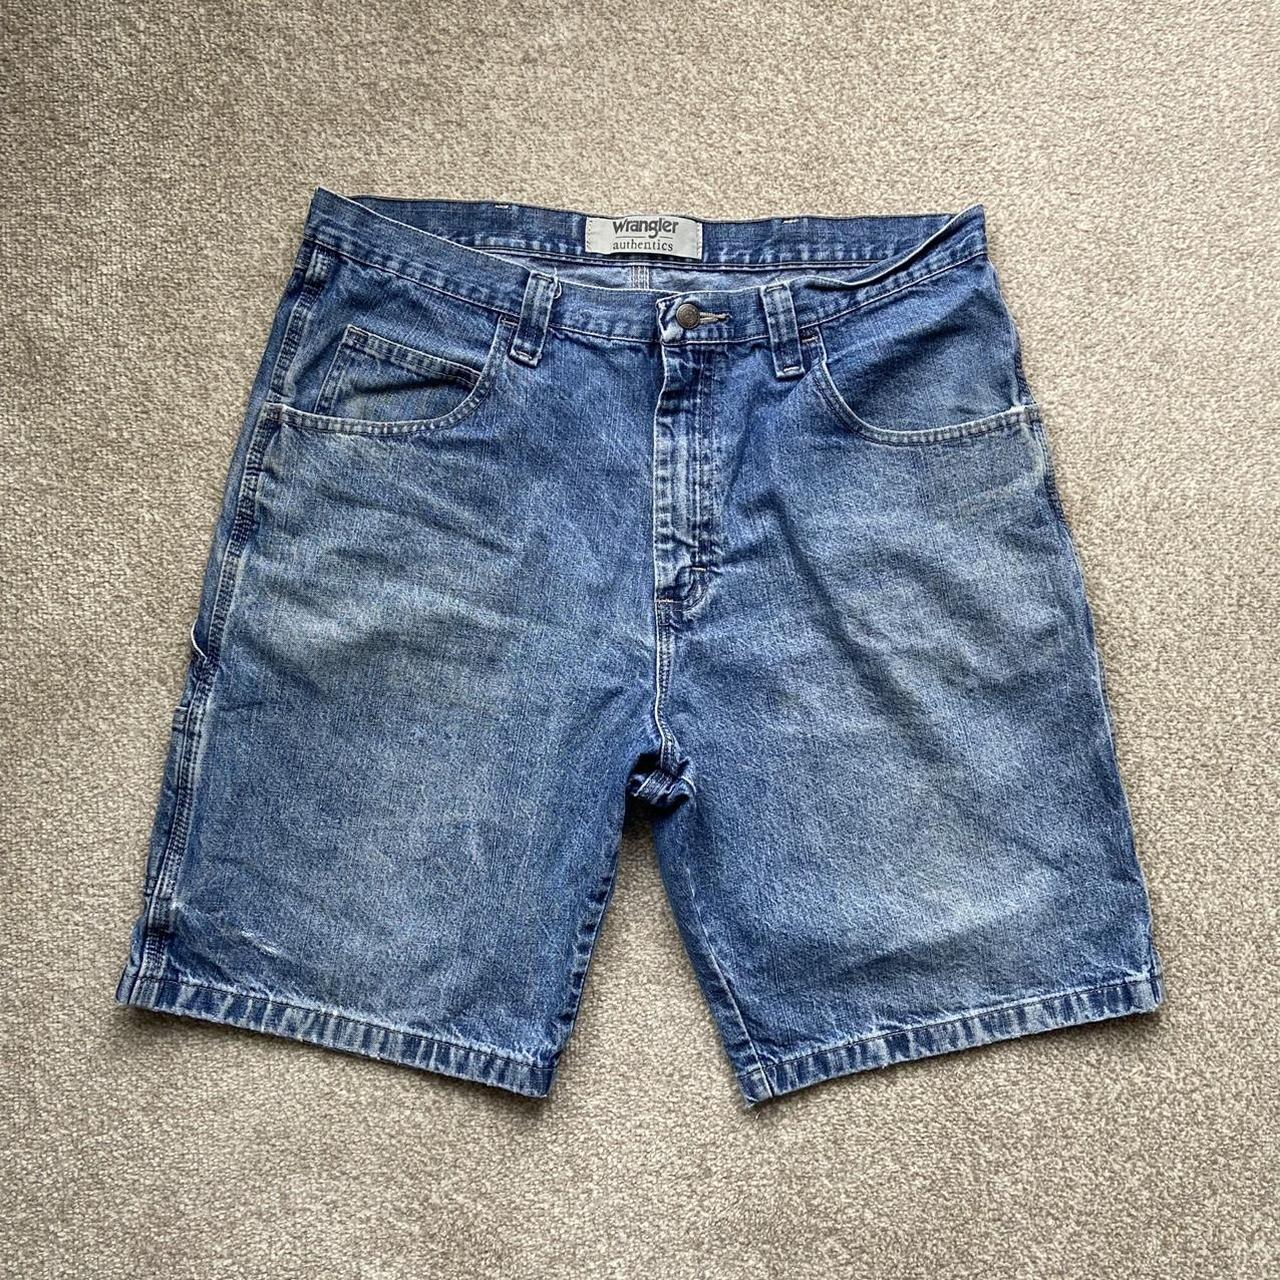 Wrangler denim capenter shorts / painter jorts size... - Depop